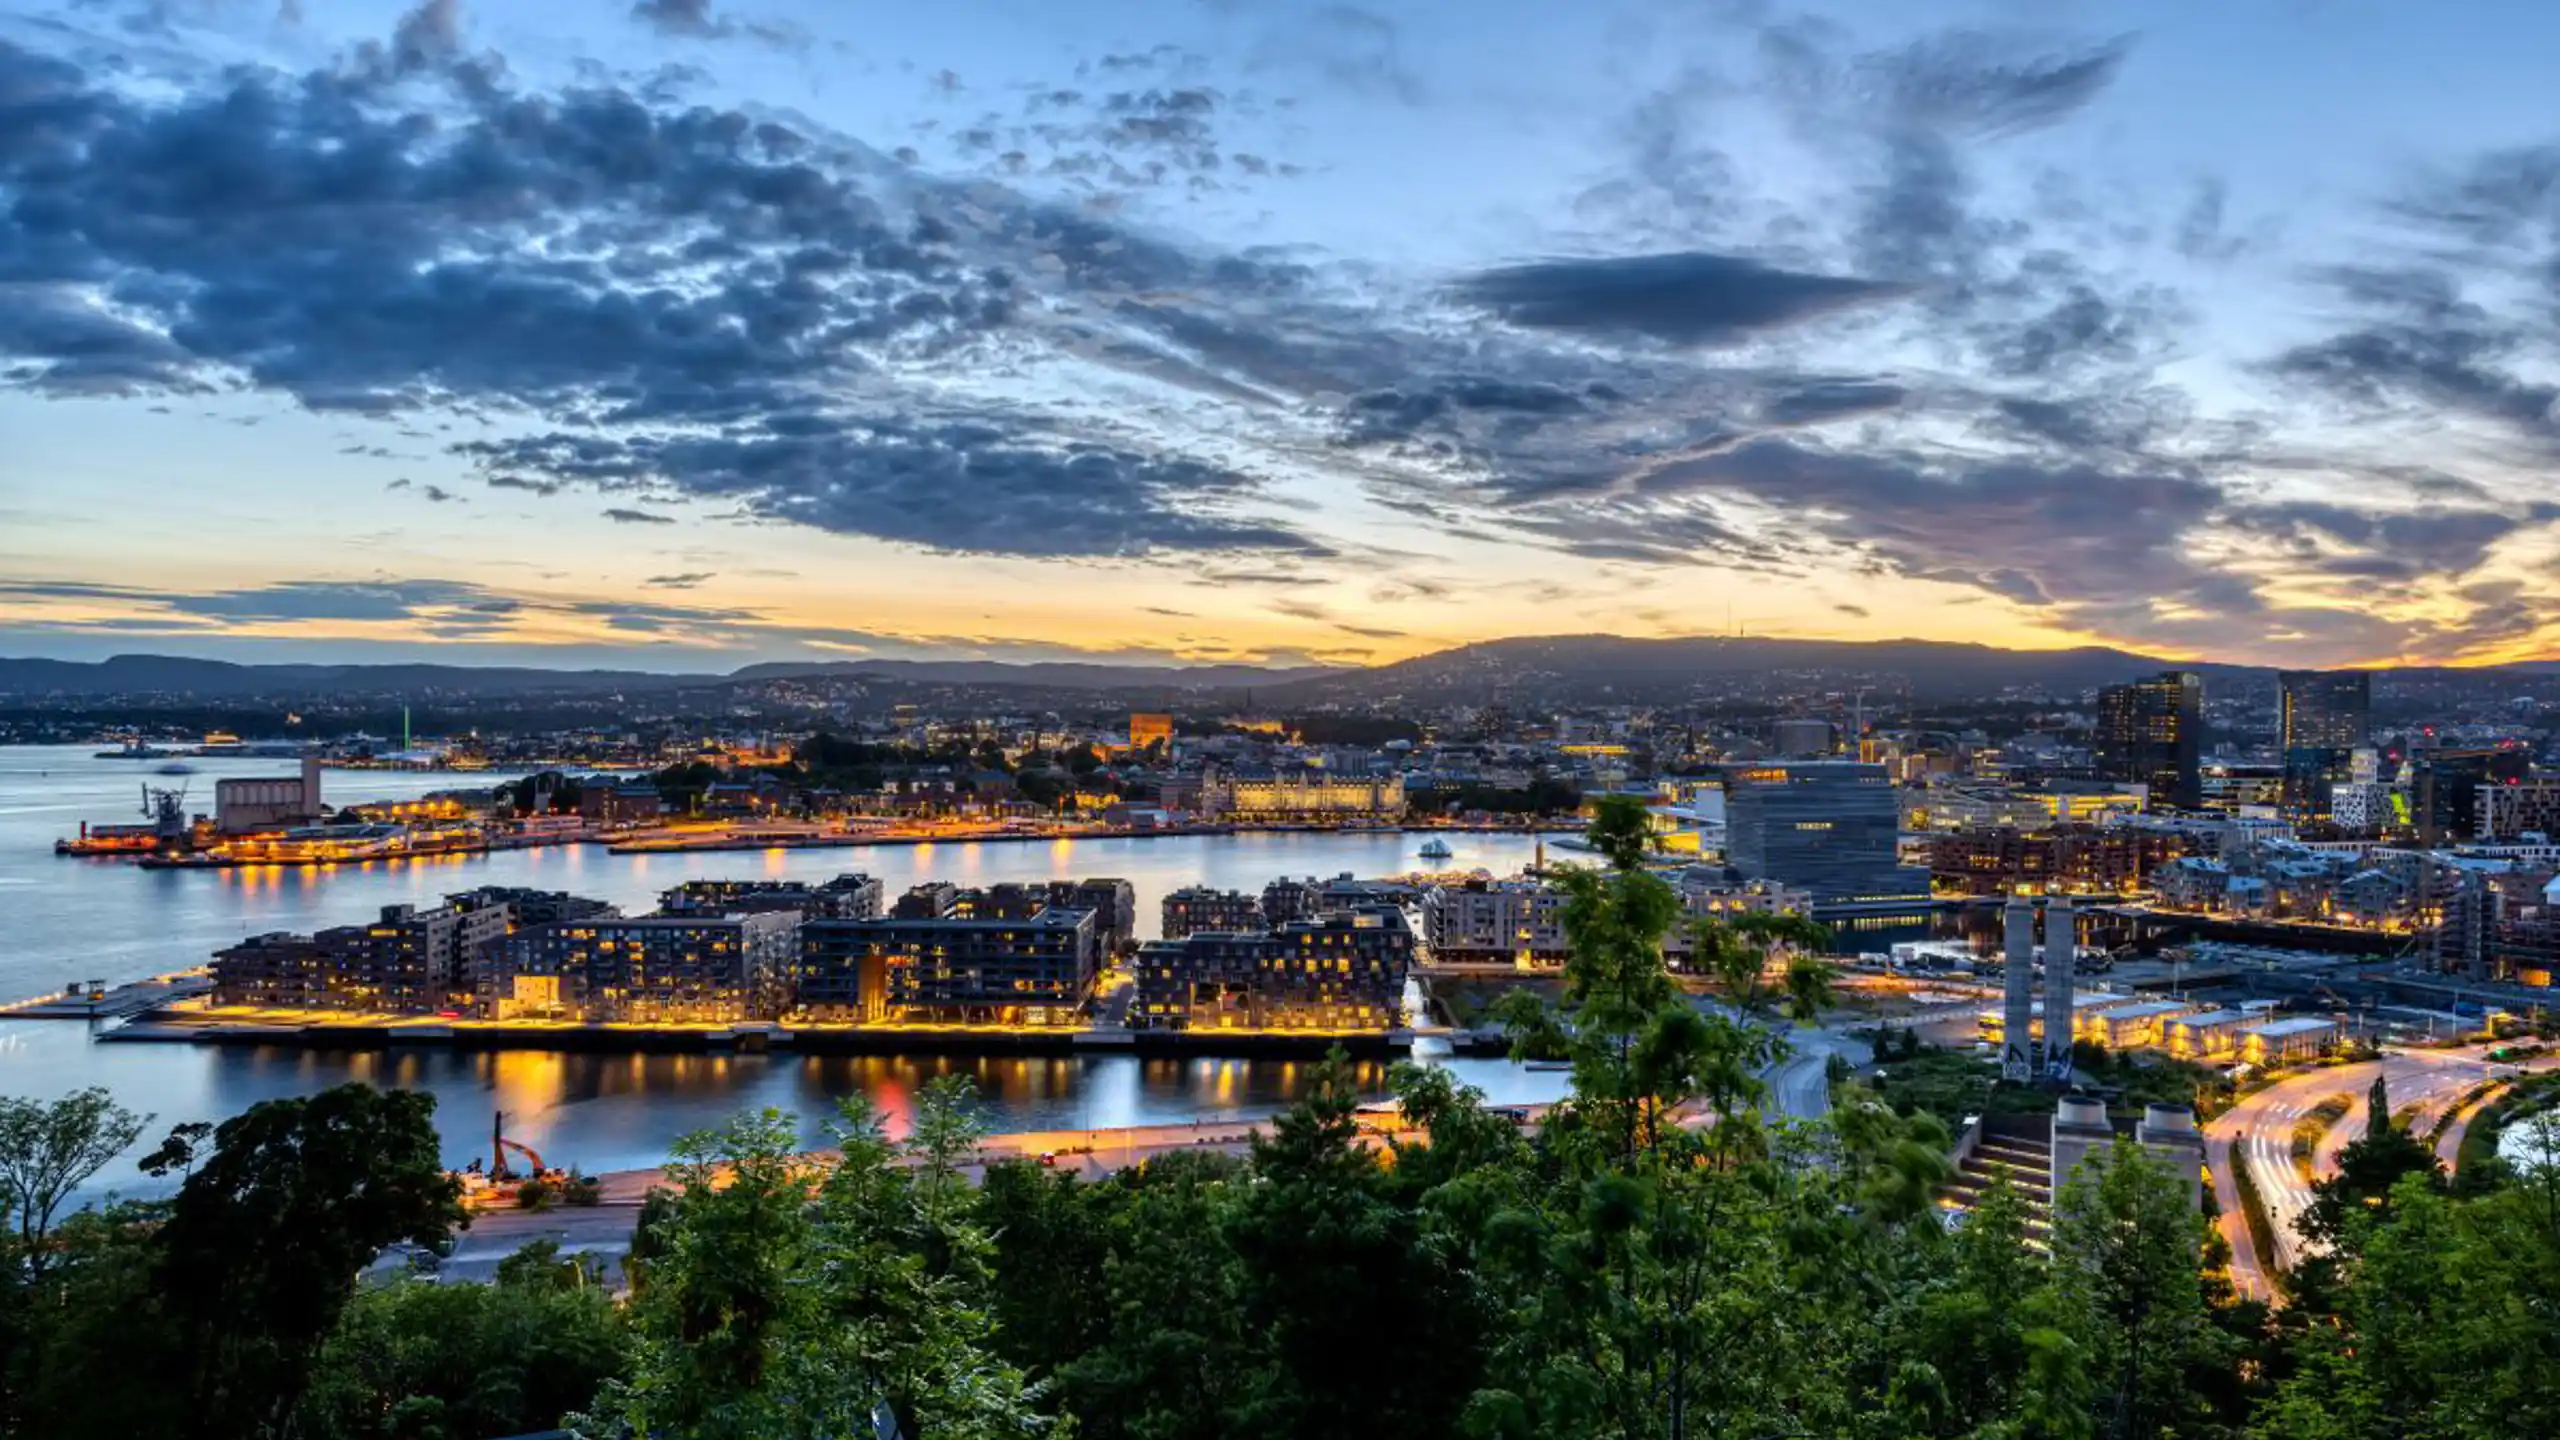 The Lights Of Oslo In Norway 2023 11 27 05 37 03 Utc (2)